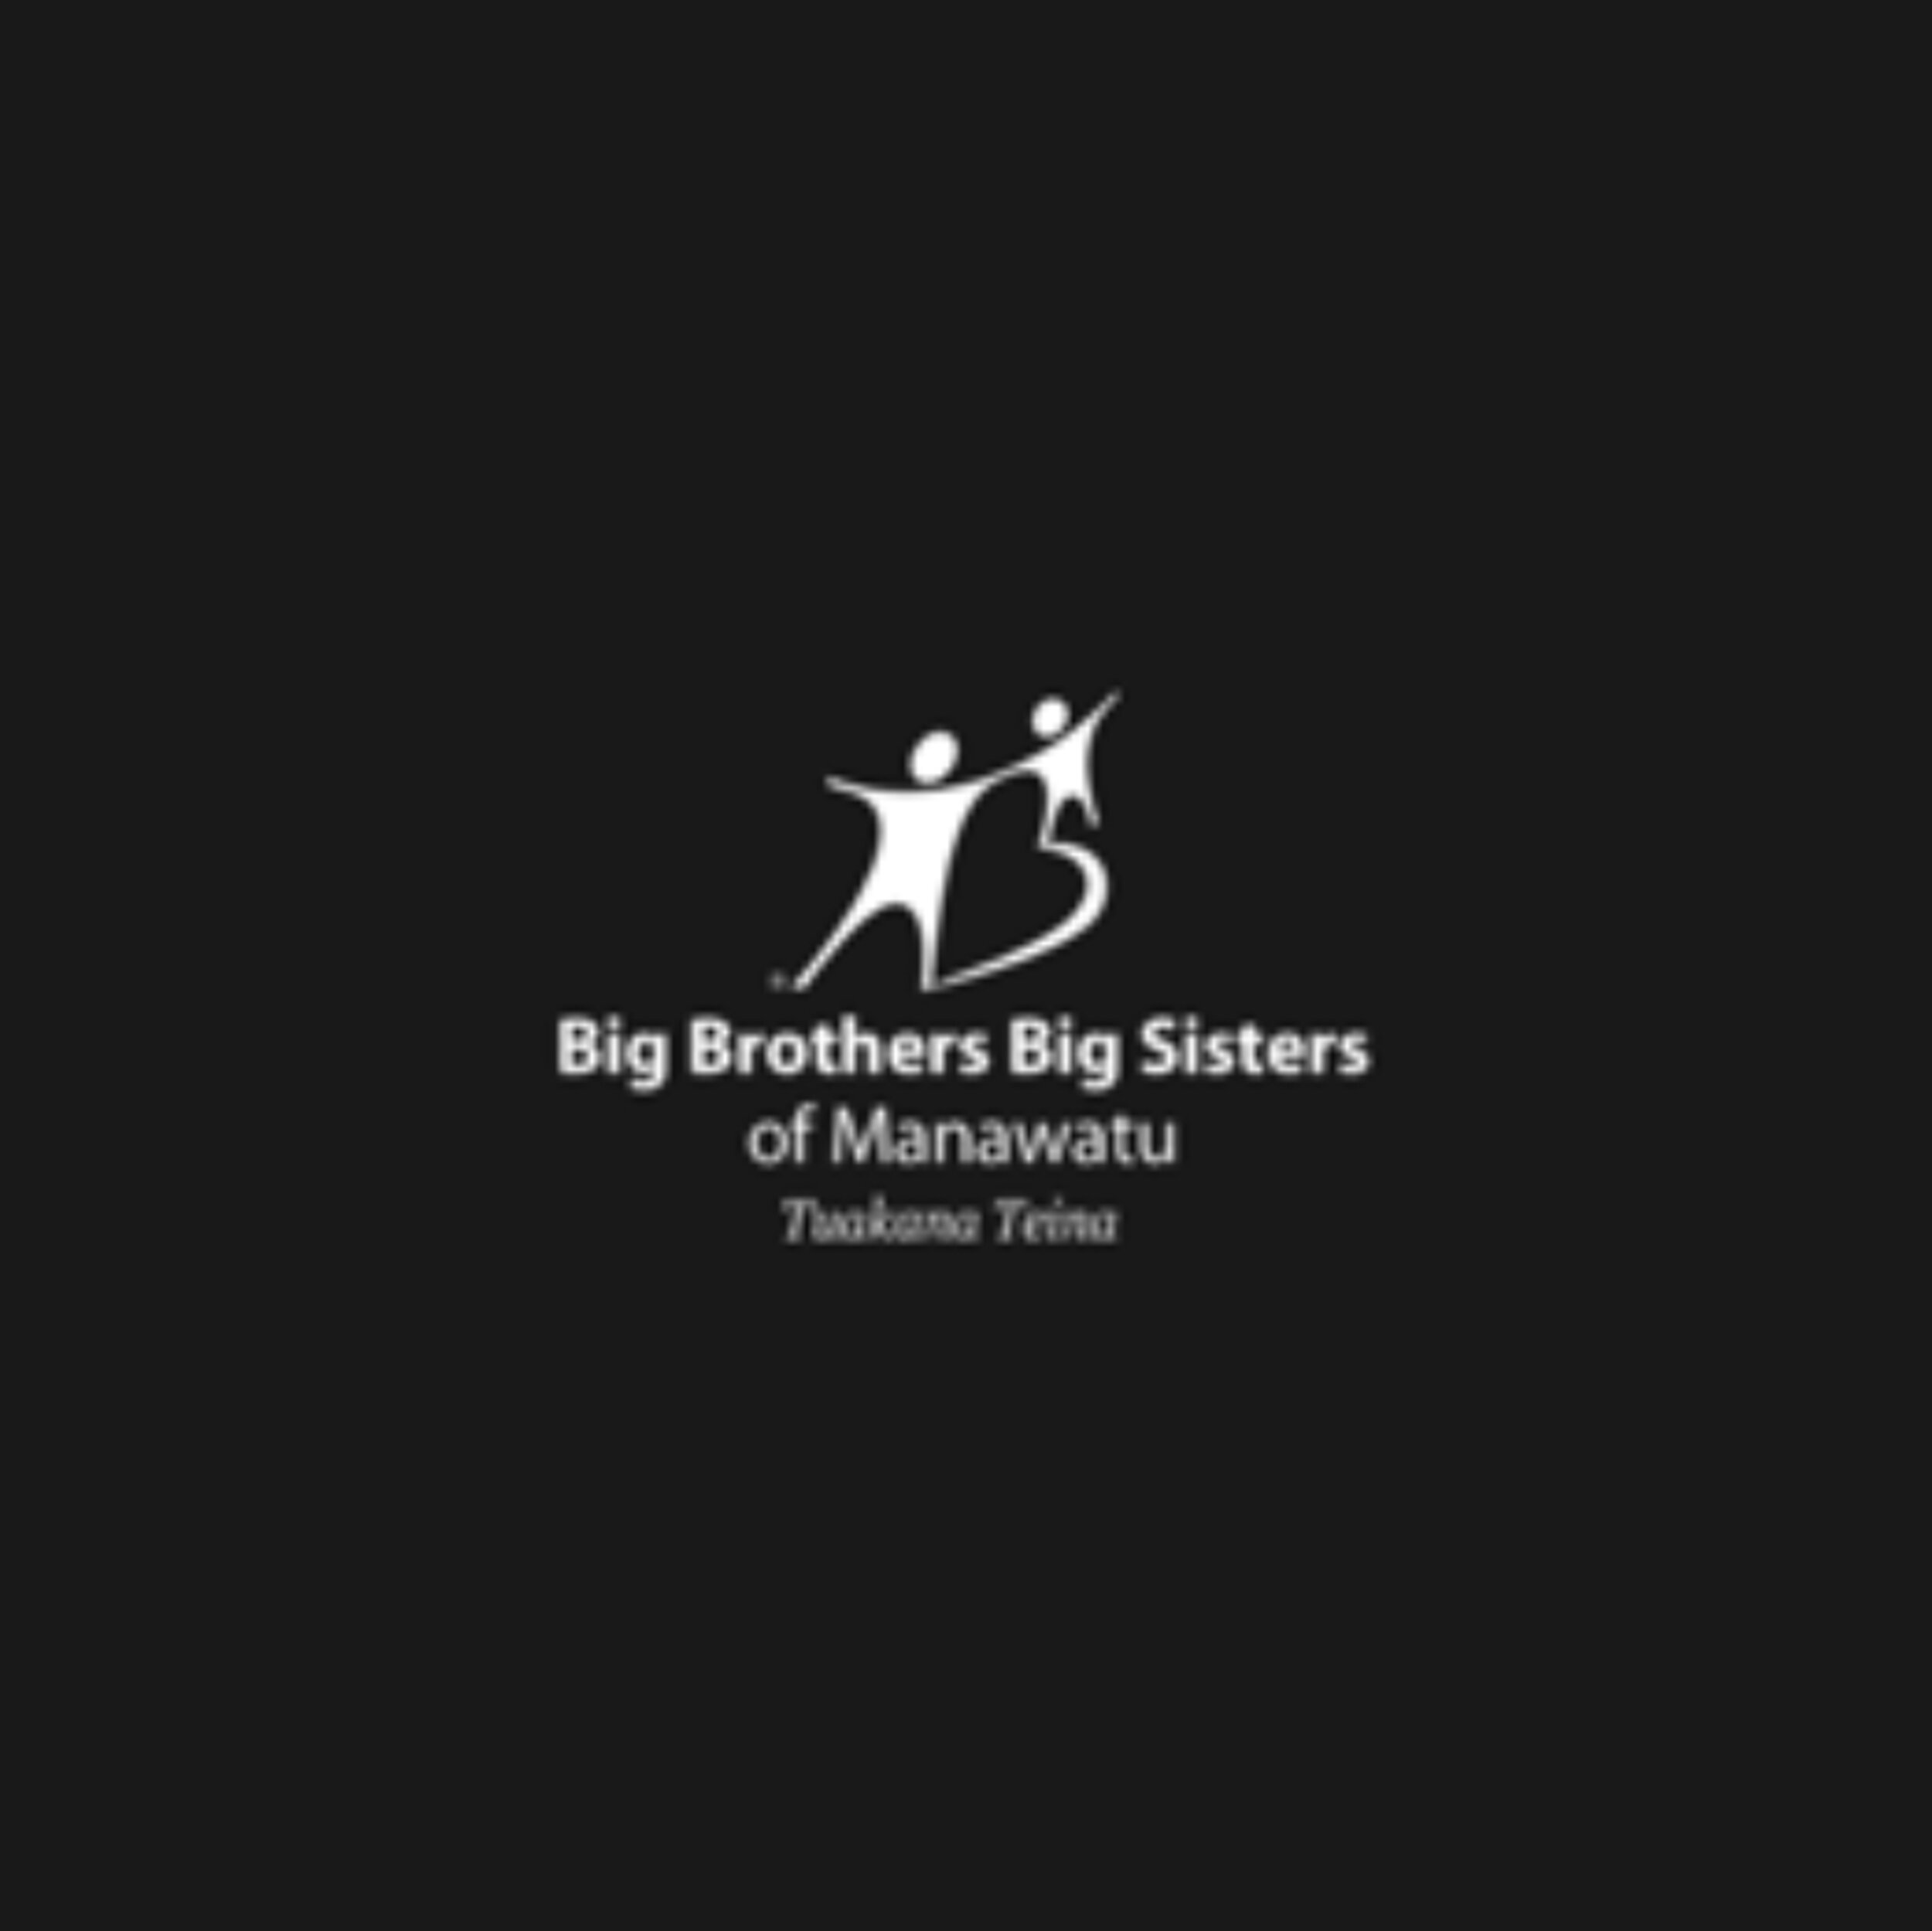 Big Brothers Big Sisters of Manawatu